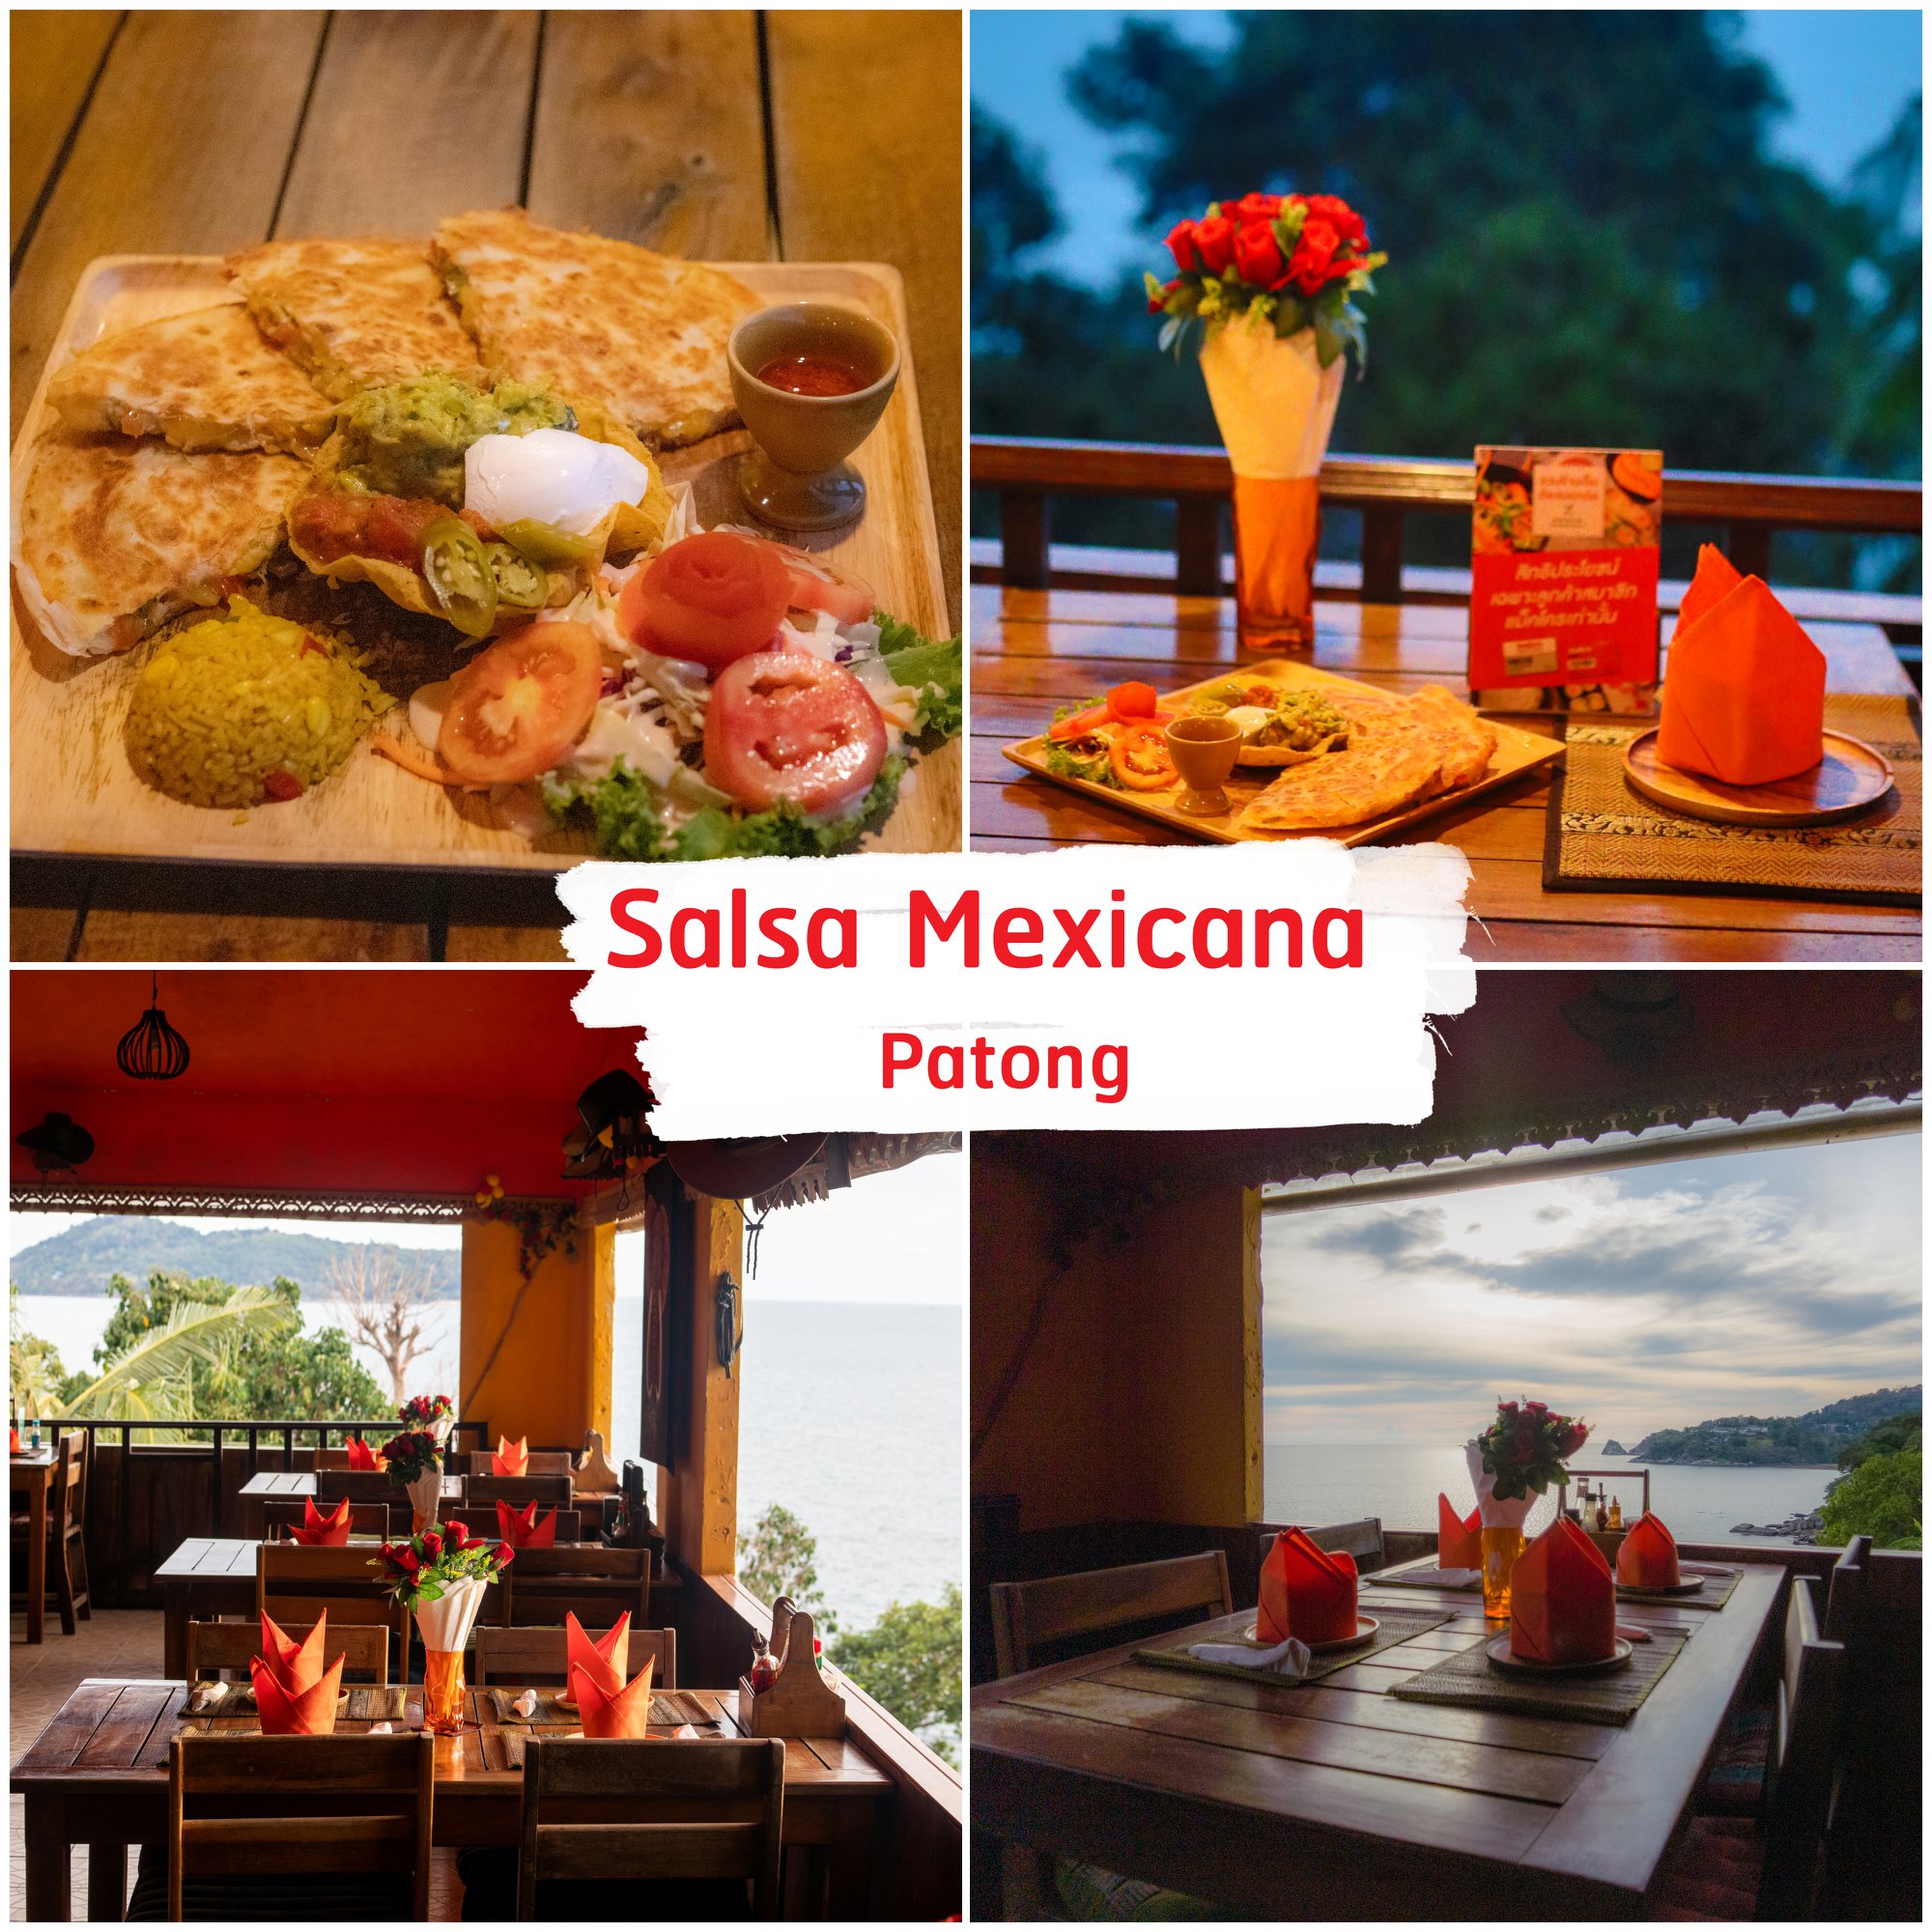 Salsa-Mexicana-Patong -จุดเด่นคือร้านอาหารเม็กซิกันที่หาทานยาก-และมีเมนูอาหารอื่นๆ-และเครื่องด้วยน้าา-รสชาติโอเค-วิวสวยหลักล้านวิวทะเล-180-องศาเลยครับ-นั่งชมพระอาทิตย์ตกฟินๆ
 ภูเก็ต,ร้านอาหารภูเก็ต,ร้านอร่อยภูเก็ต